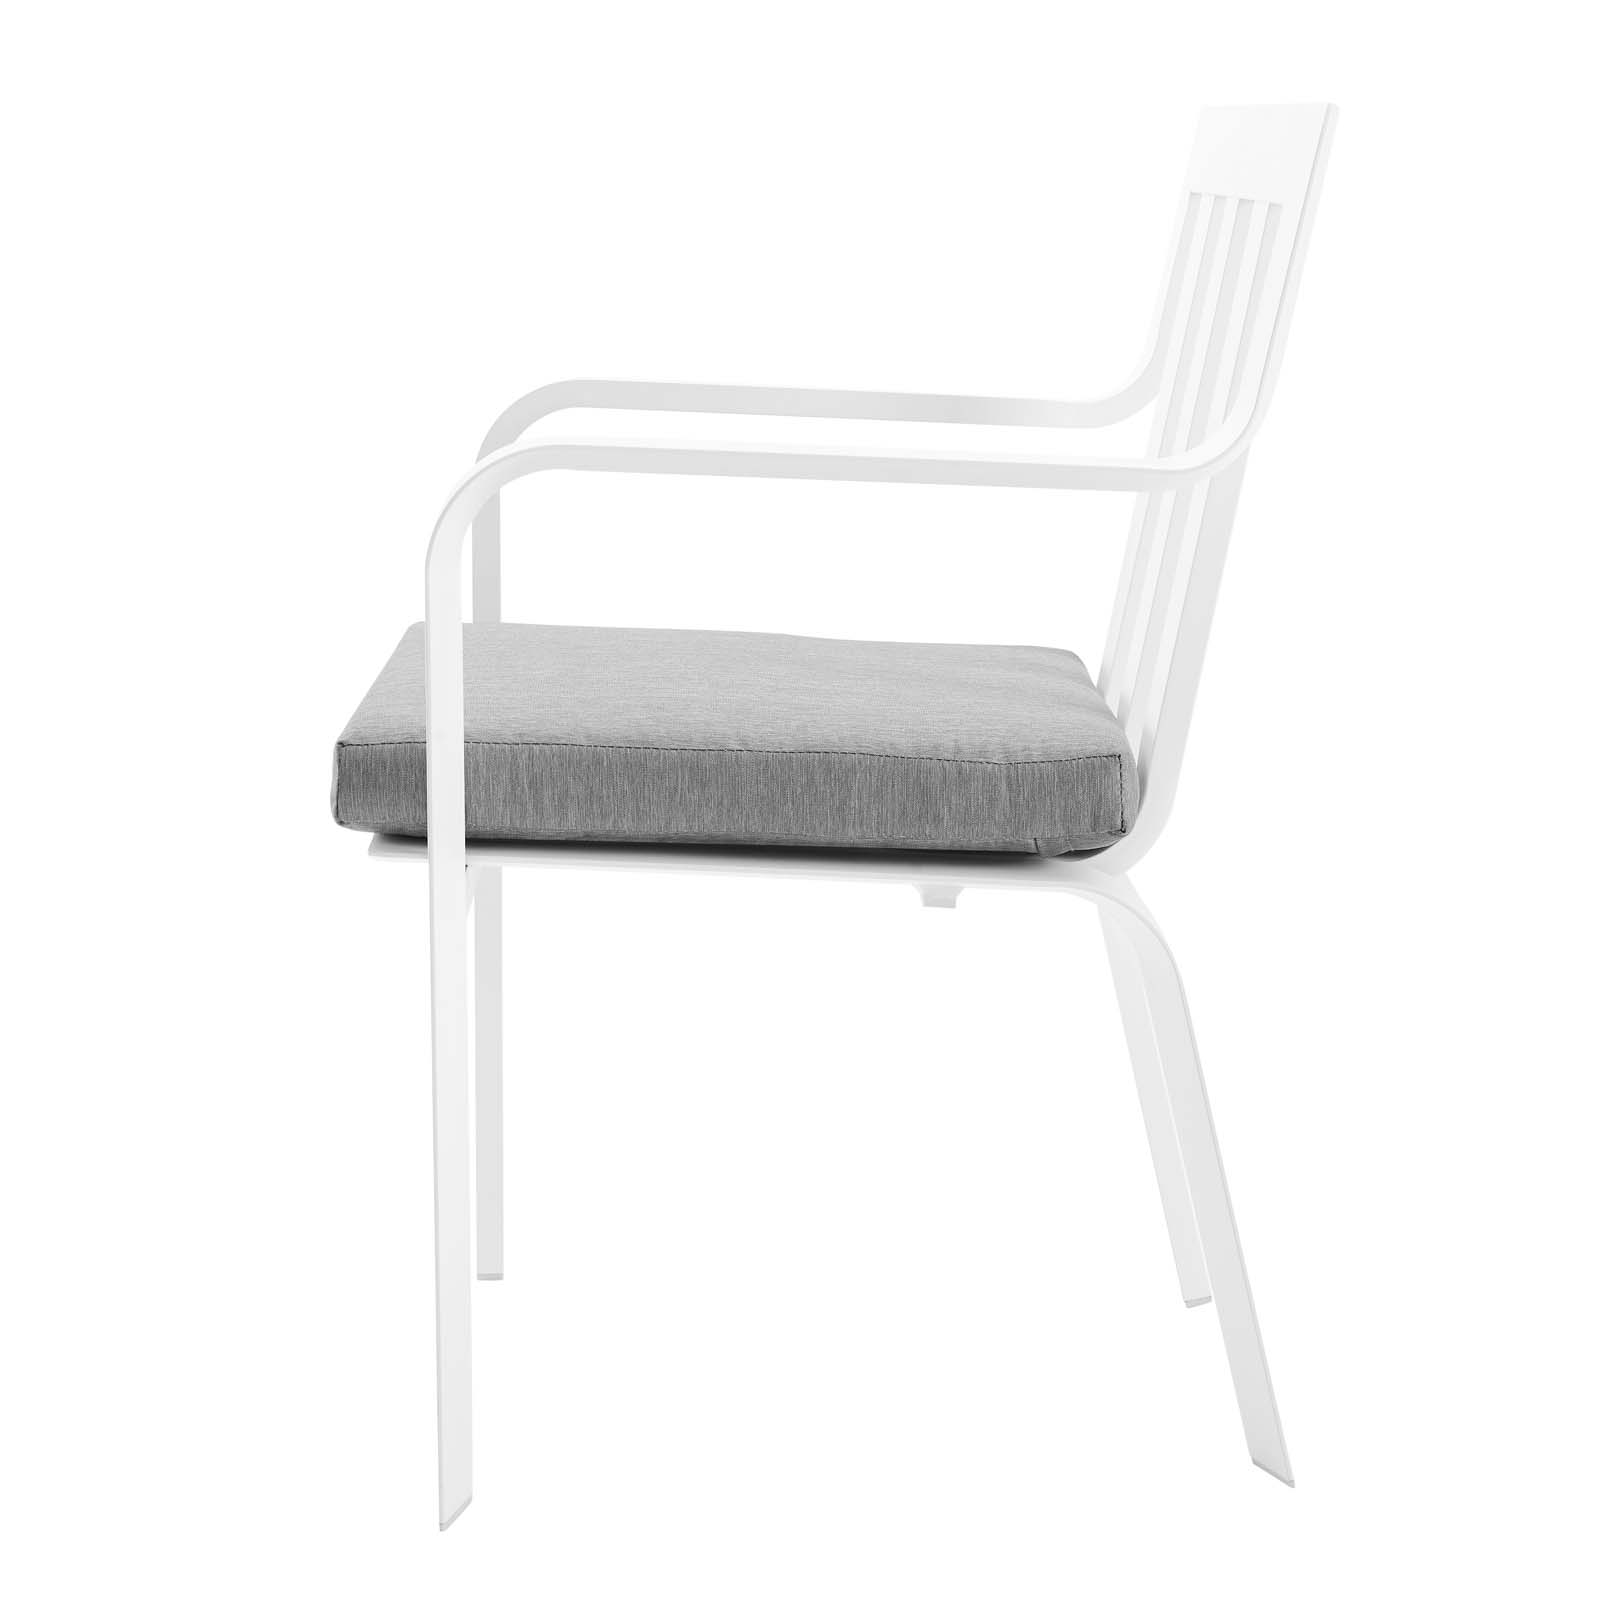 Contemporary Modern Urban Designer Outdoor Patio Balcony Garden Furniture Side Dining Armchair Chair, Fabric Aluminum, White Grey Gray - image 3 of 6